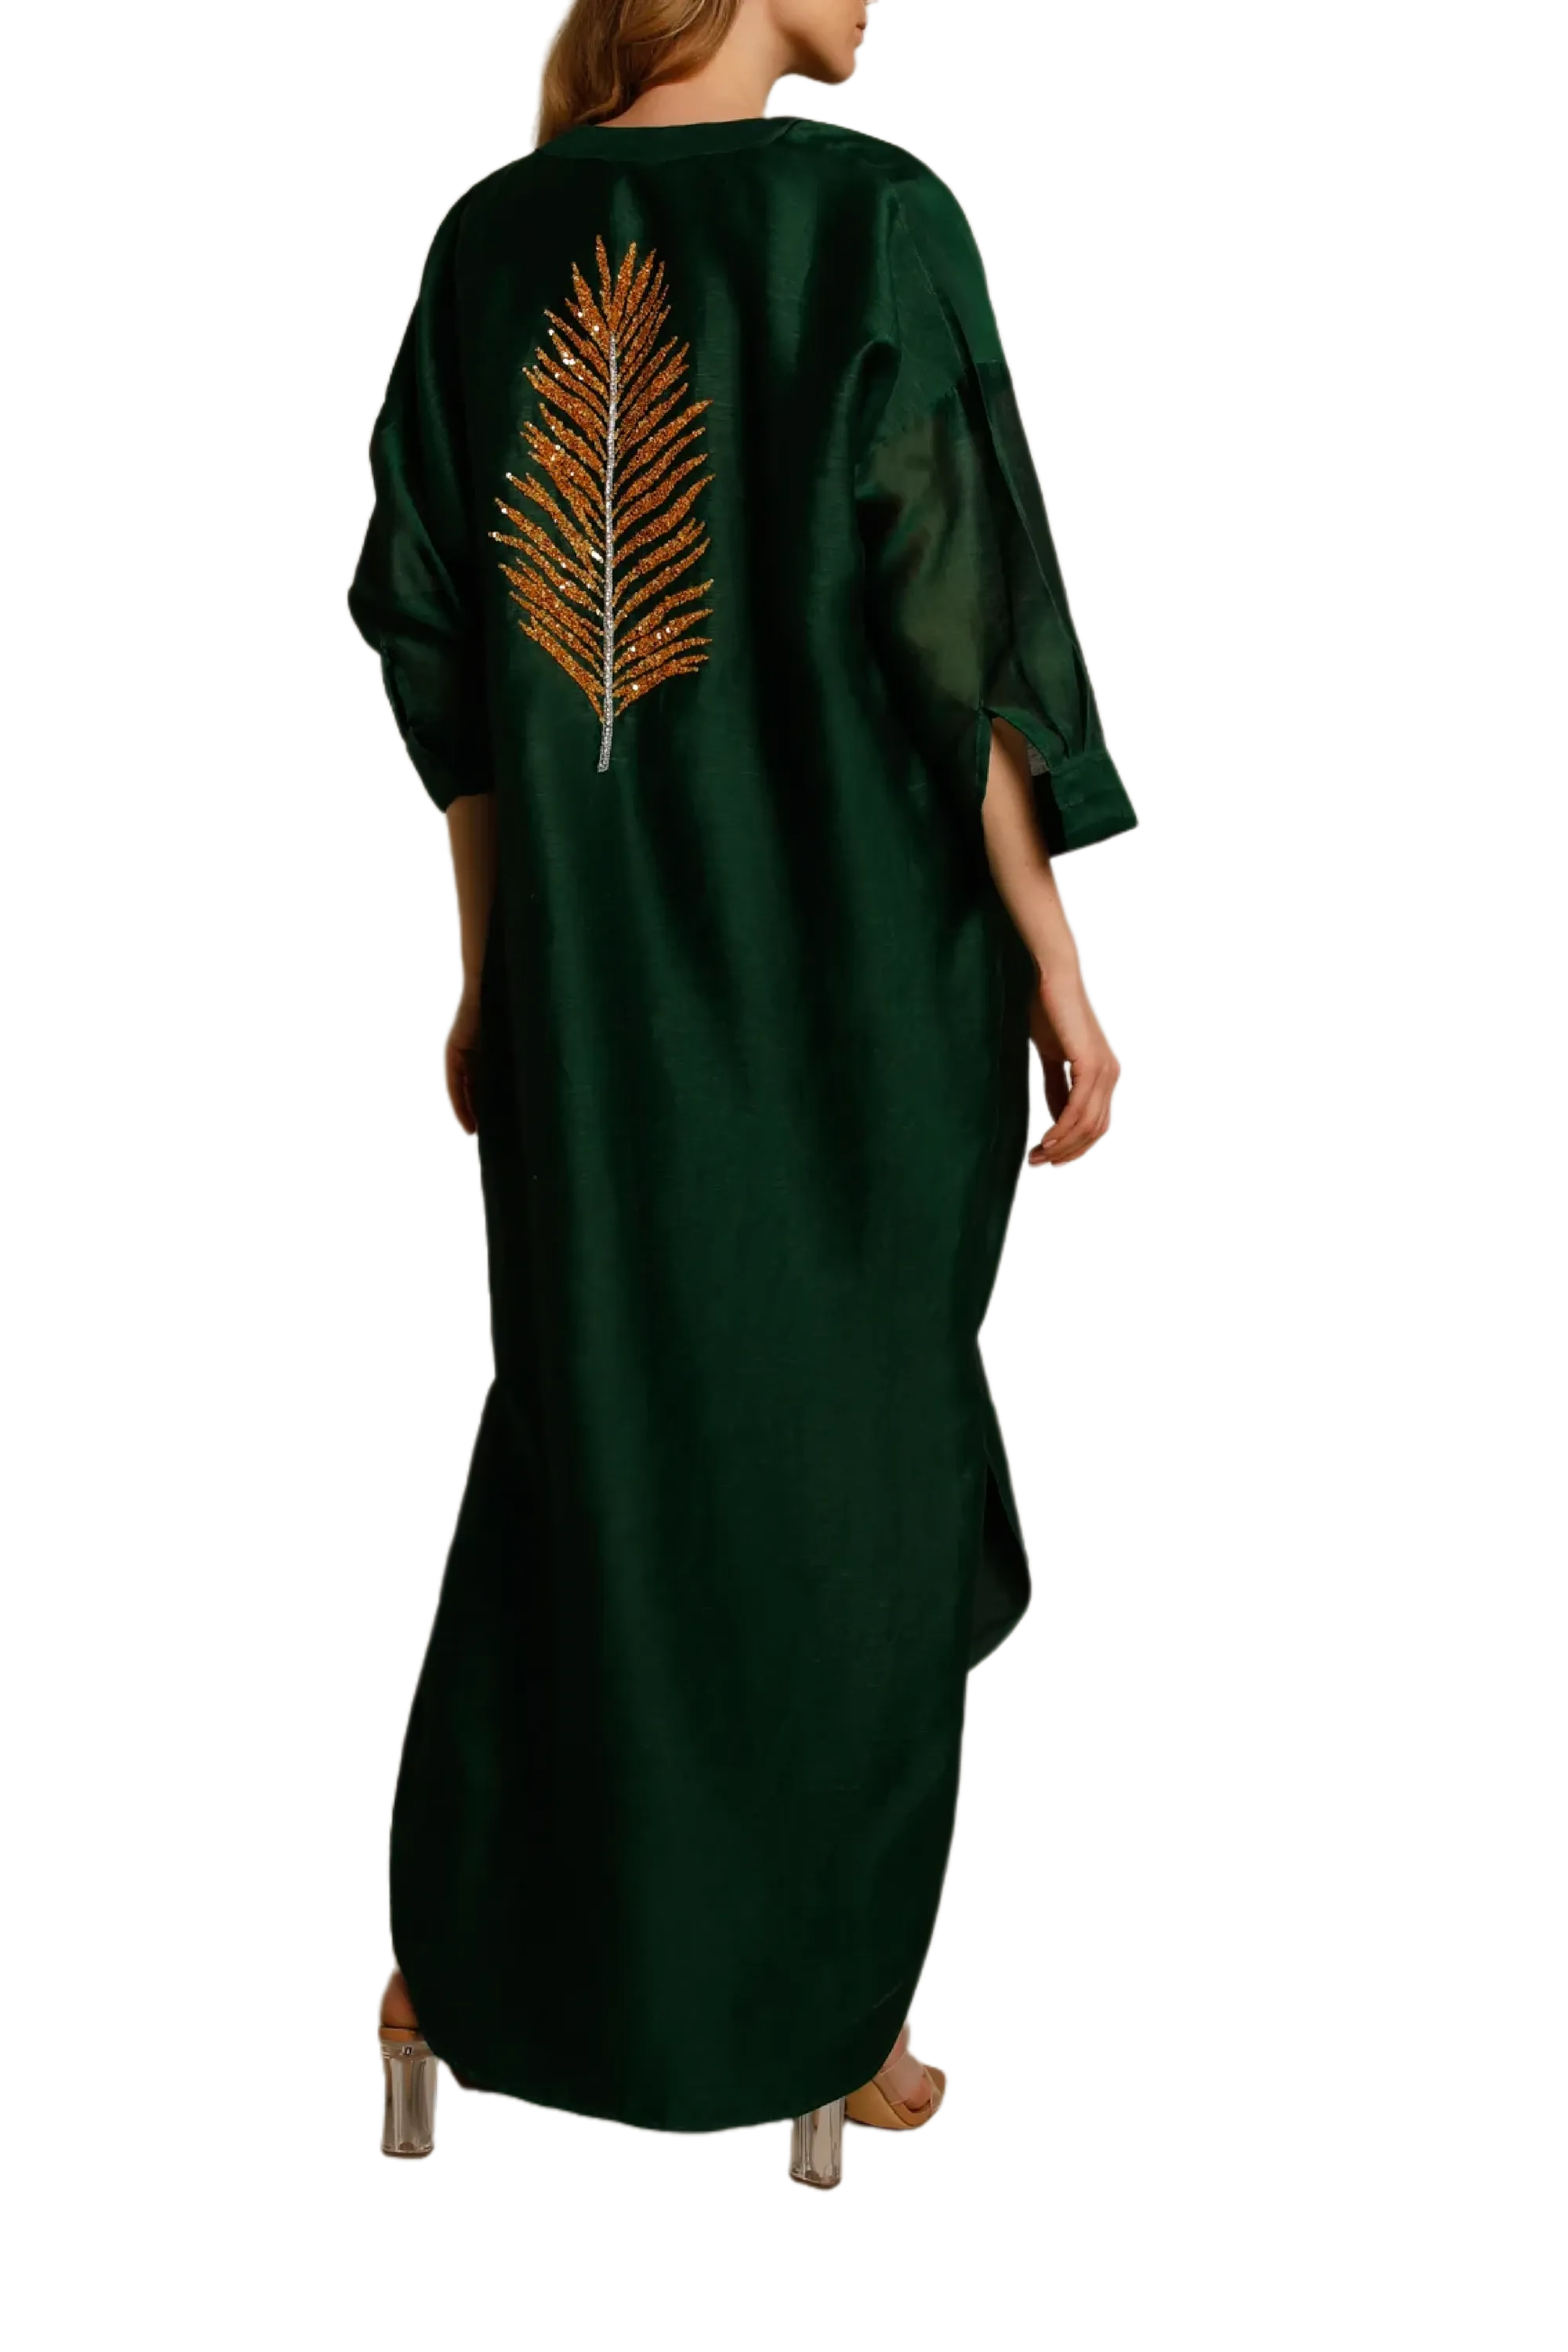 Areka Palm Dress in Green